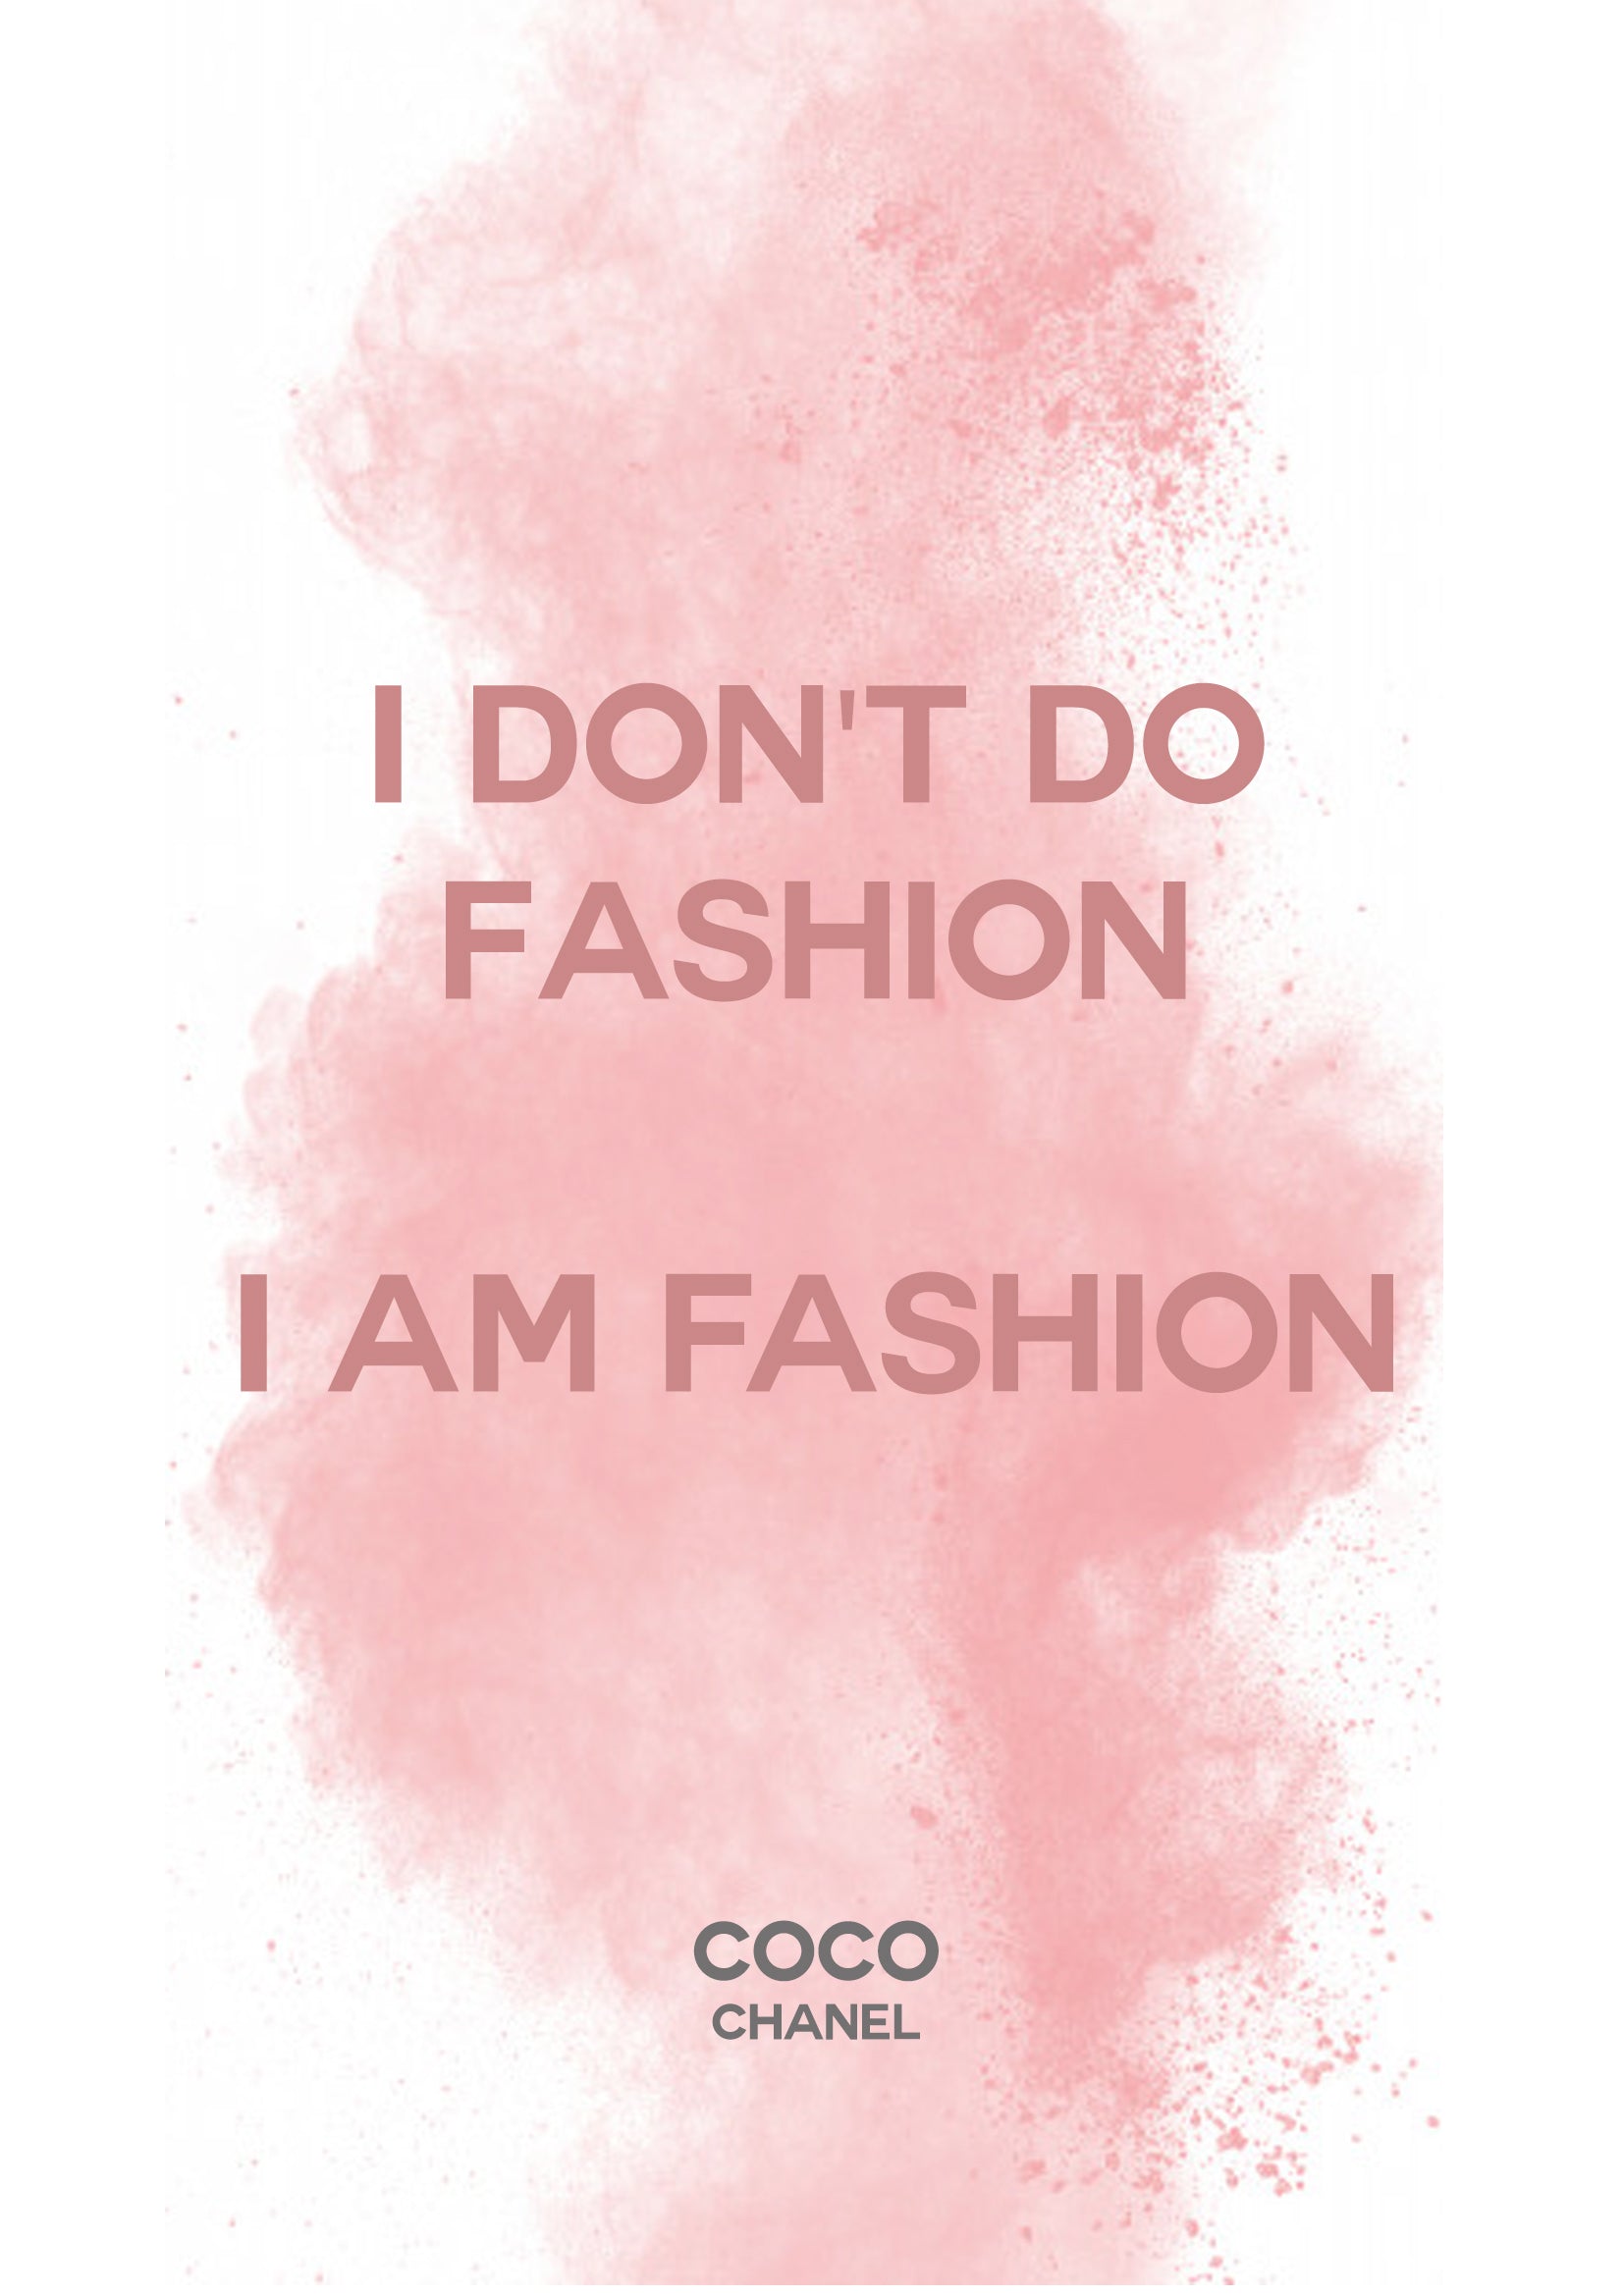 Buy Coco I Don't Do Fashion Powder Quote Print Online